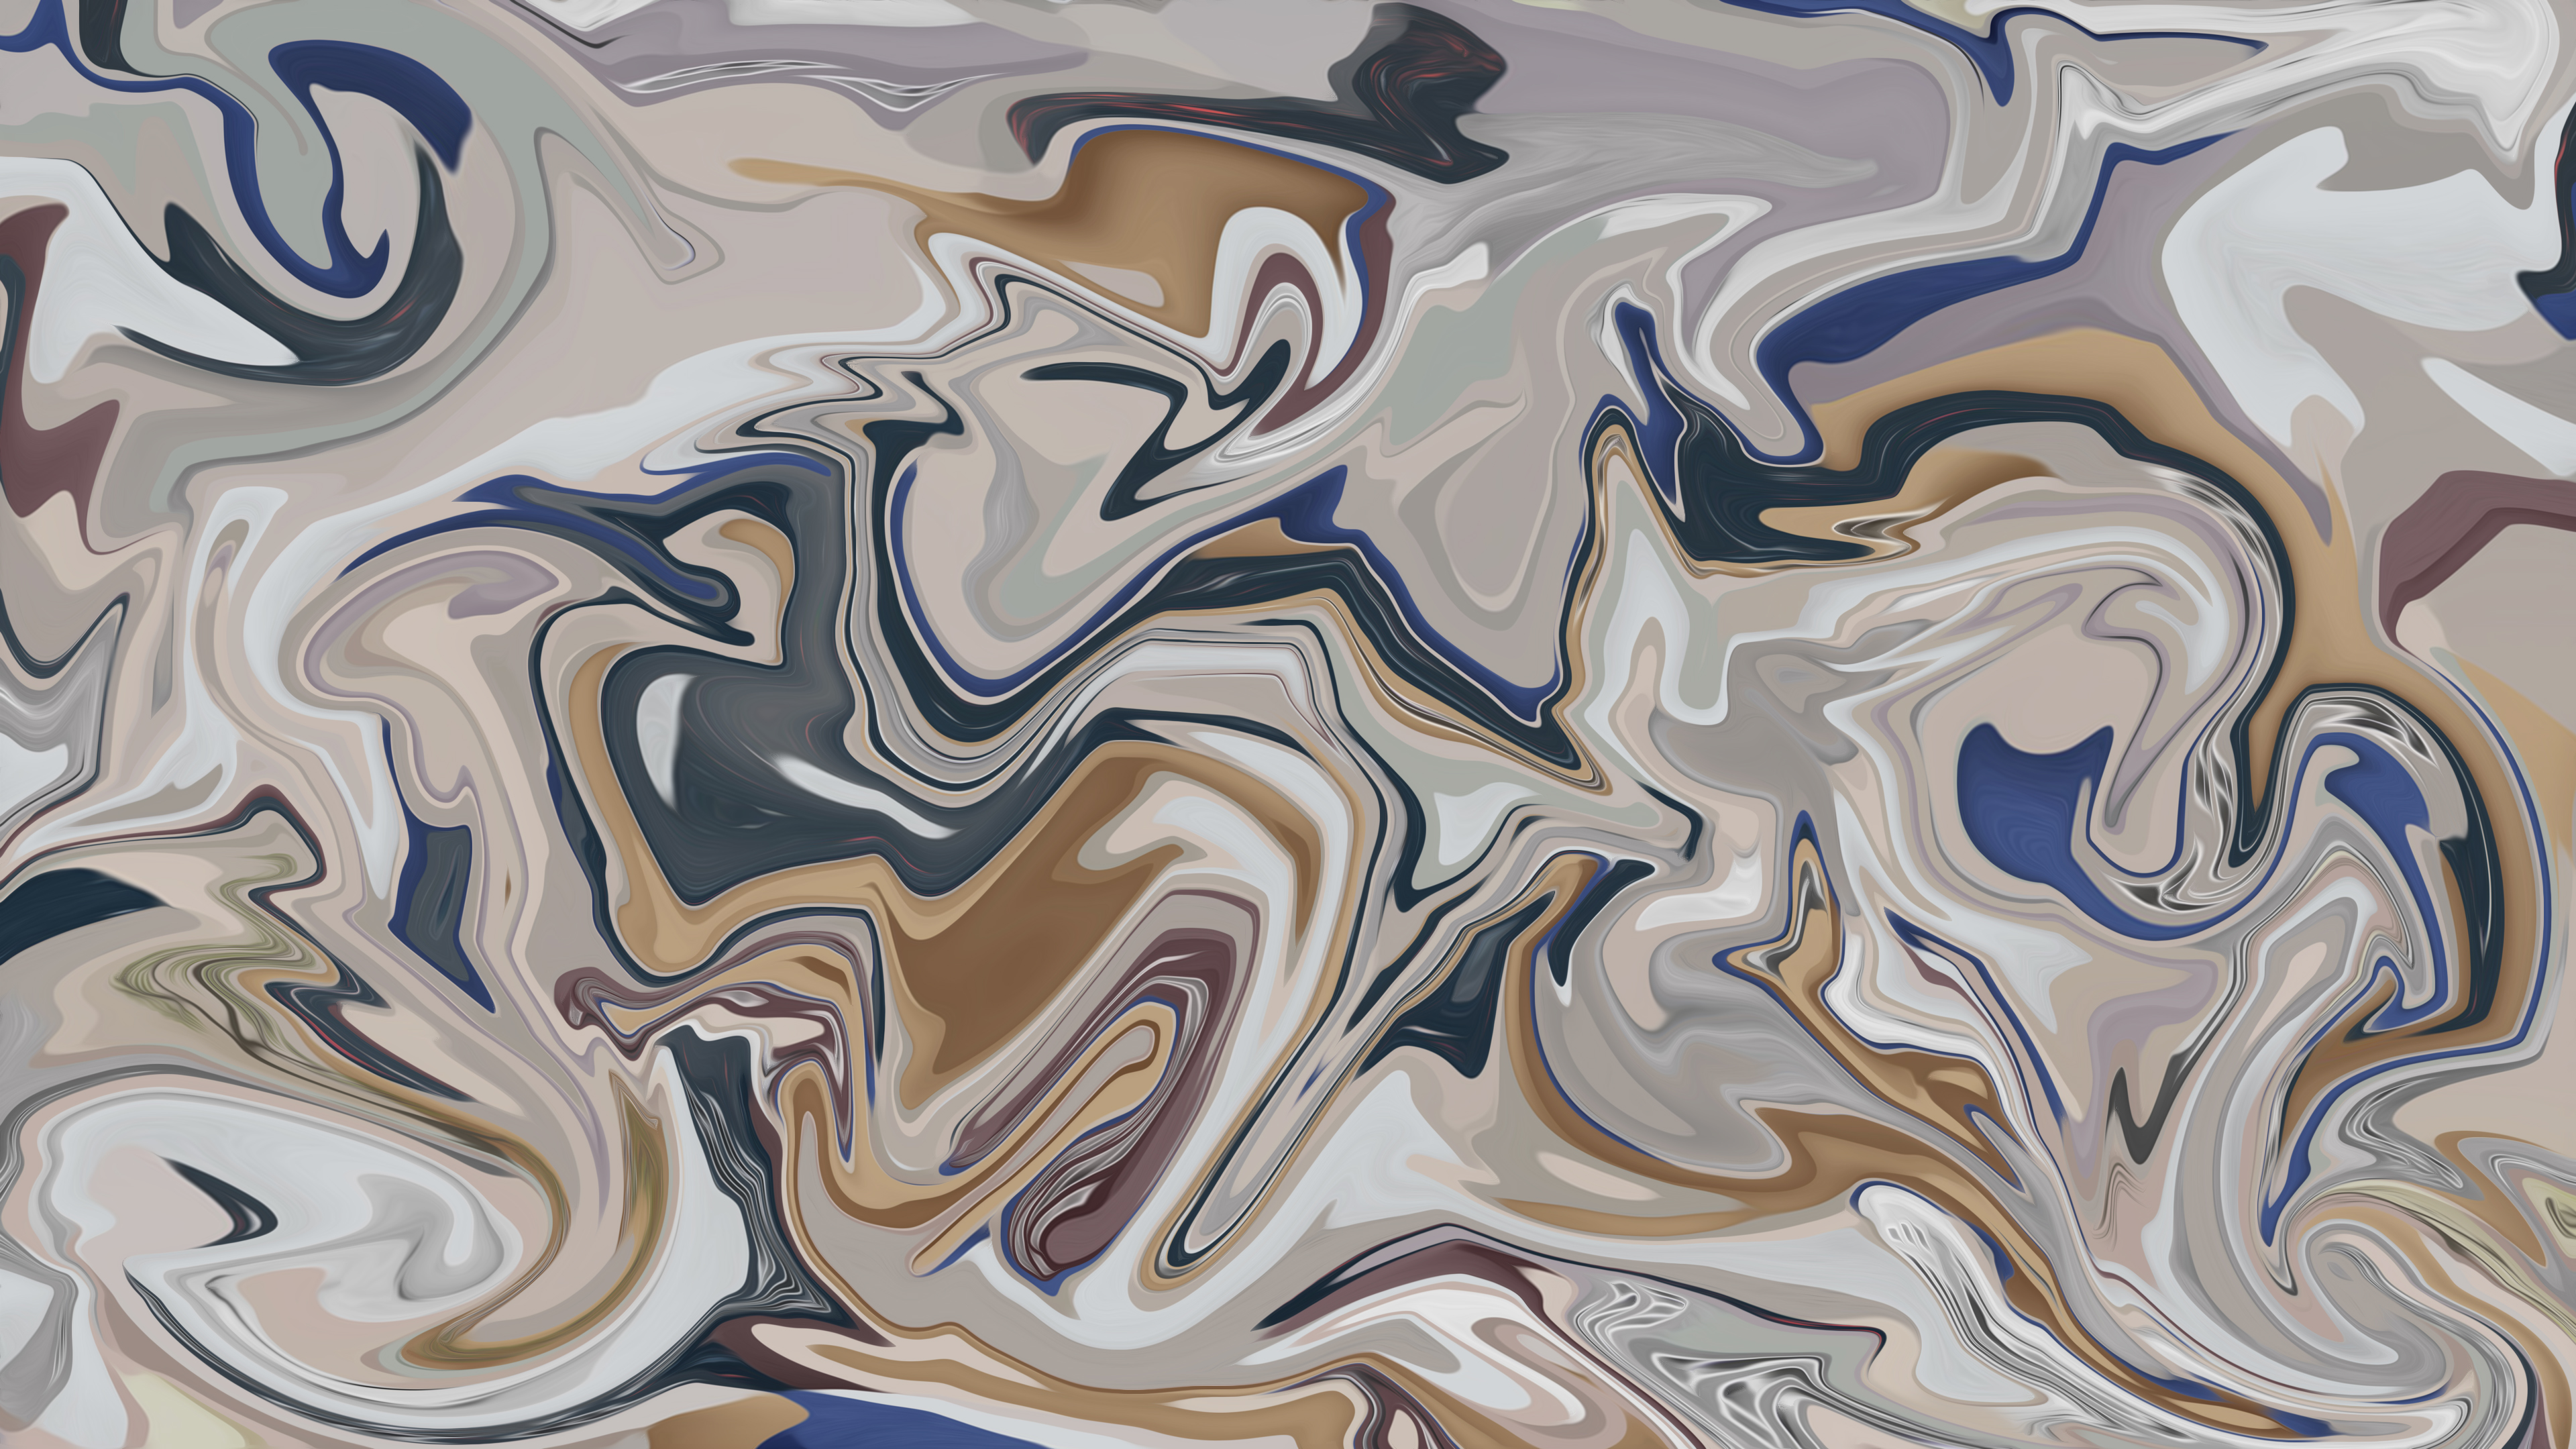 Abstract Fluid Liquid Illustration Graphic Design Artwork Digital Art Shapes Colorful Wind Light Bac 3840x2160